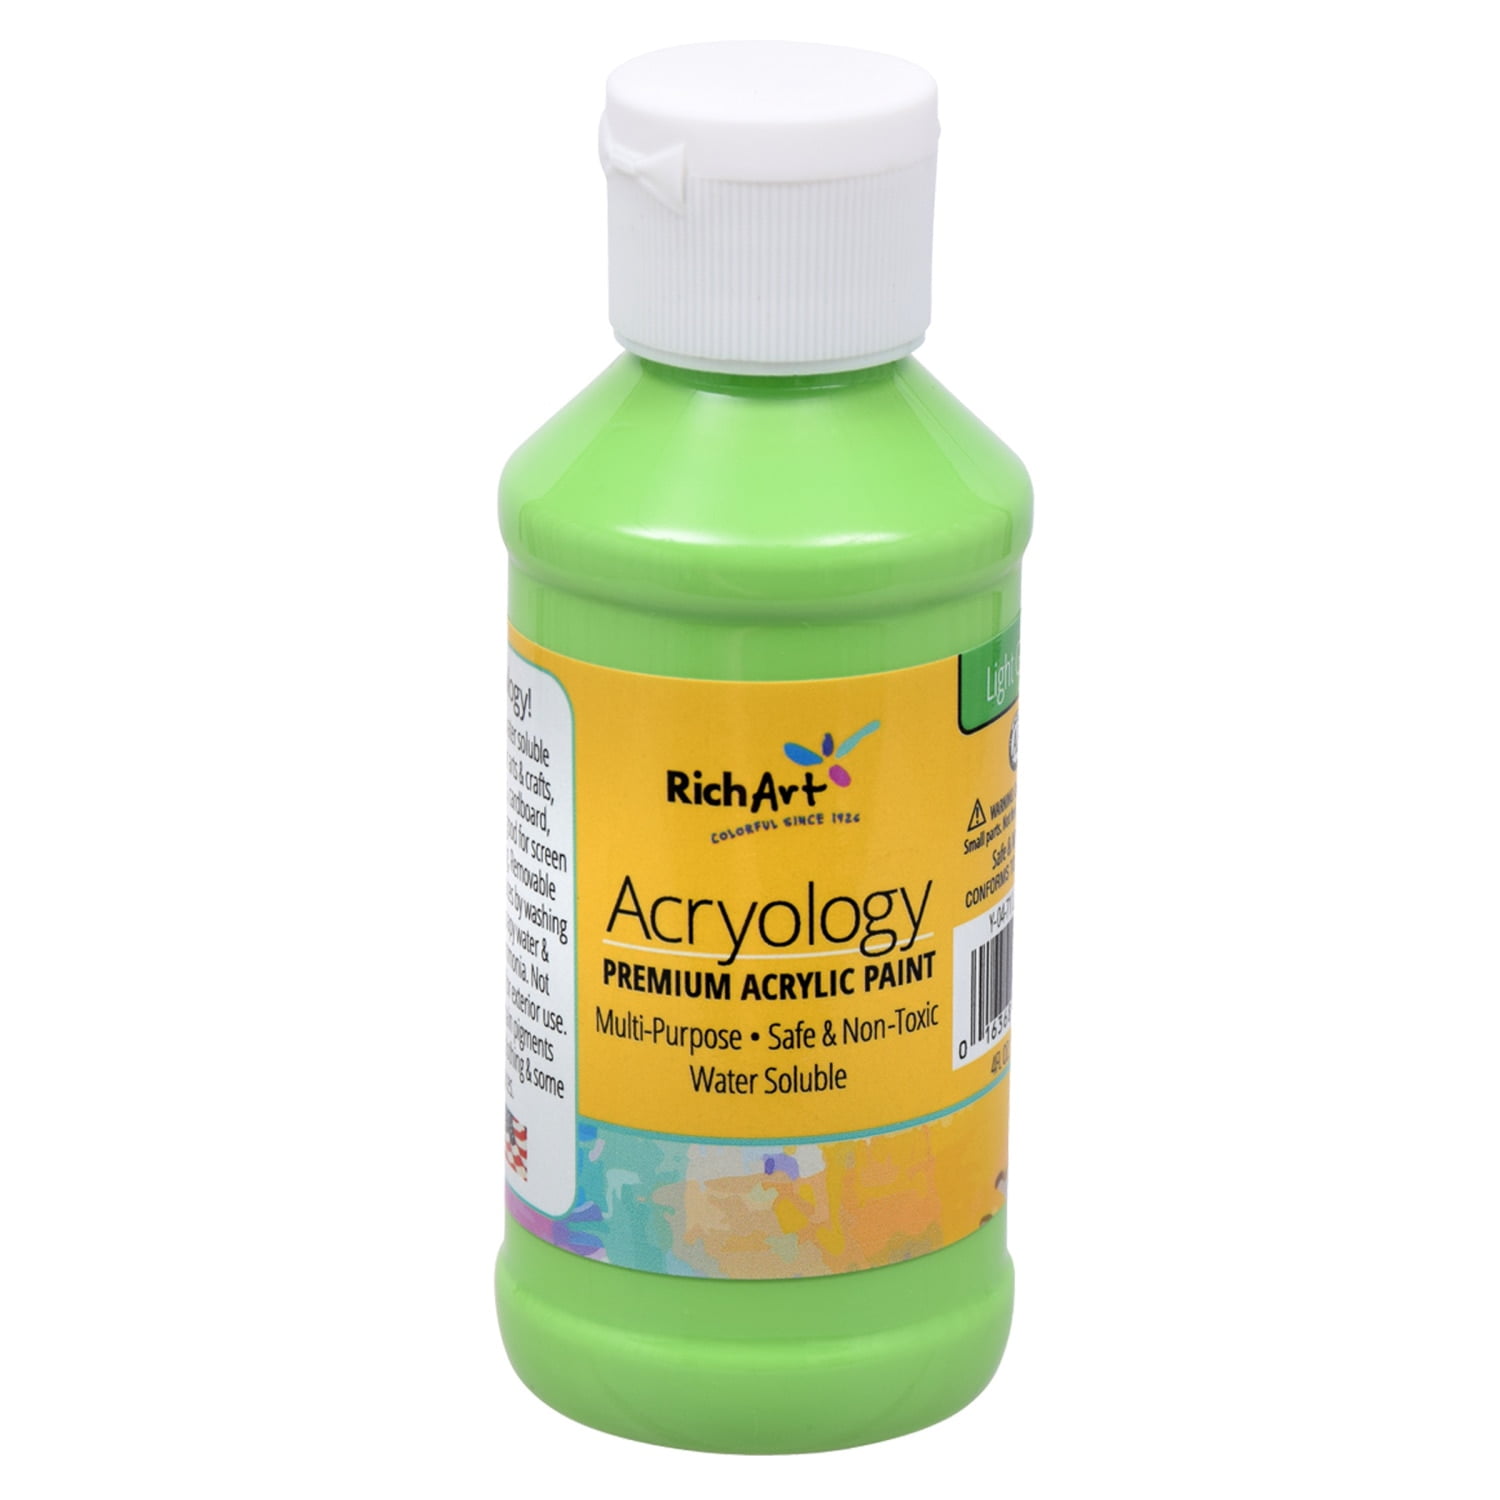 Acryology Acrylic Paint 2 Colors, Pink + Powder Blue, 6 oz Bottles, Non-Toxic